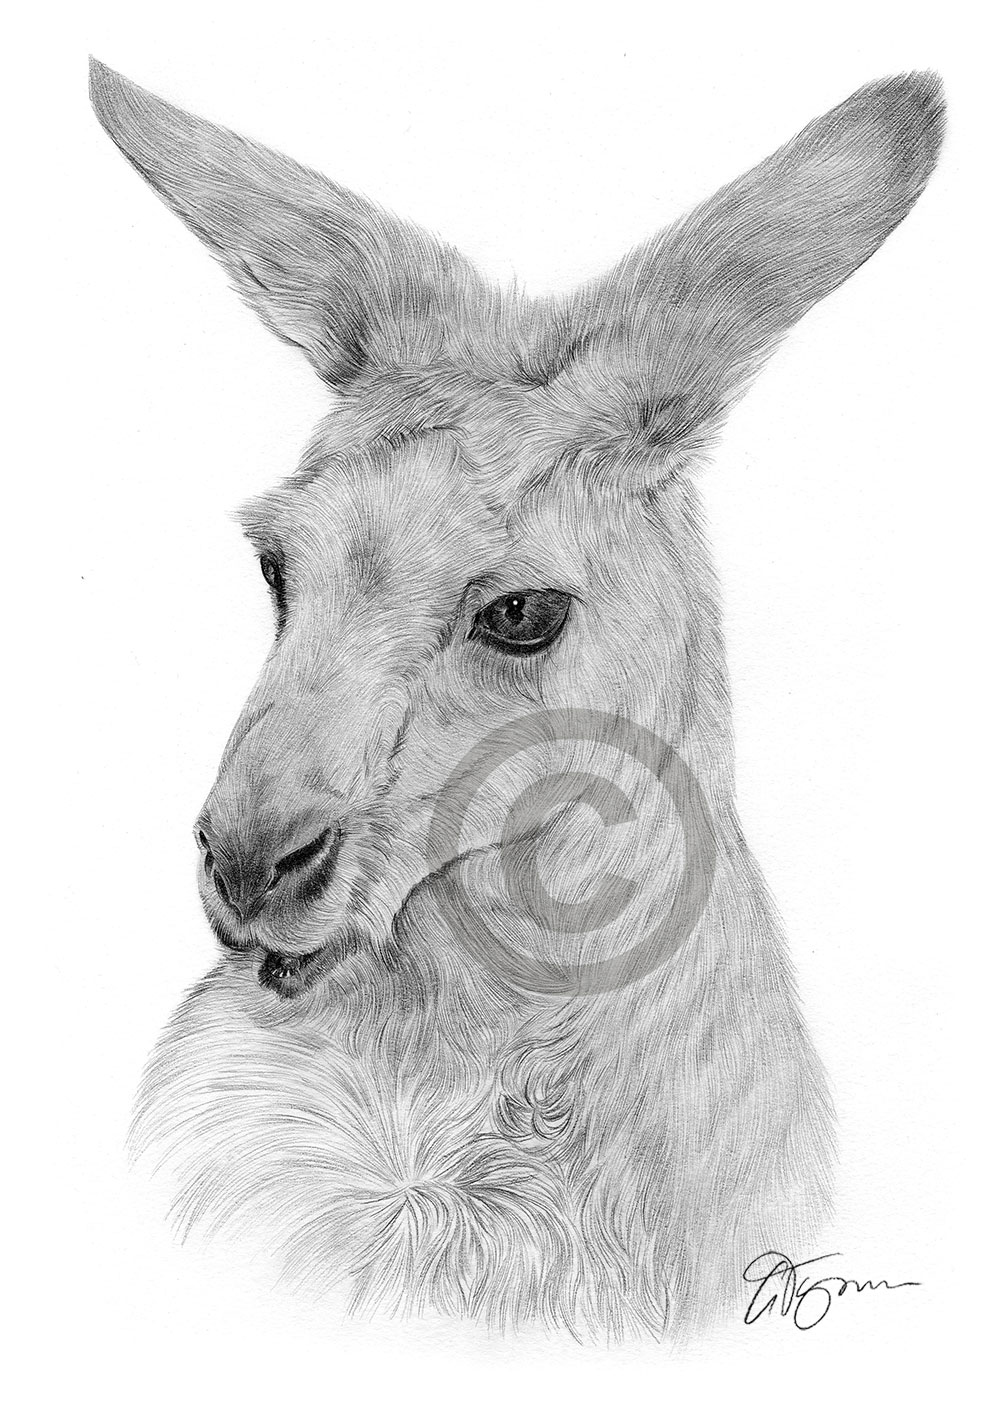 Pencil drawing of a kangaroo by artist Gary Tymon